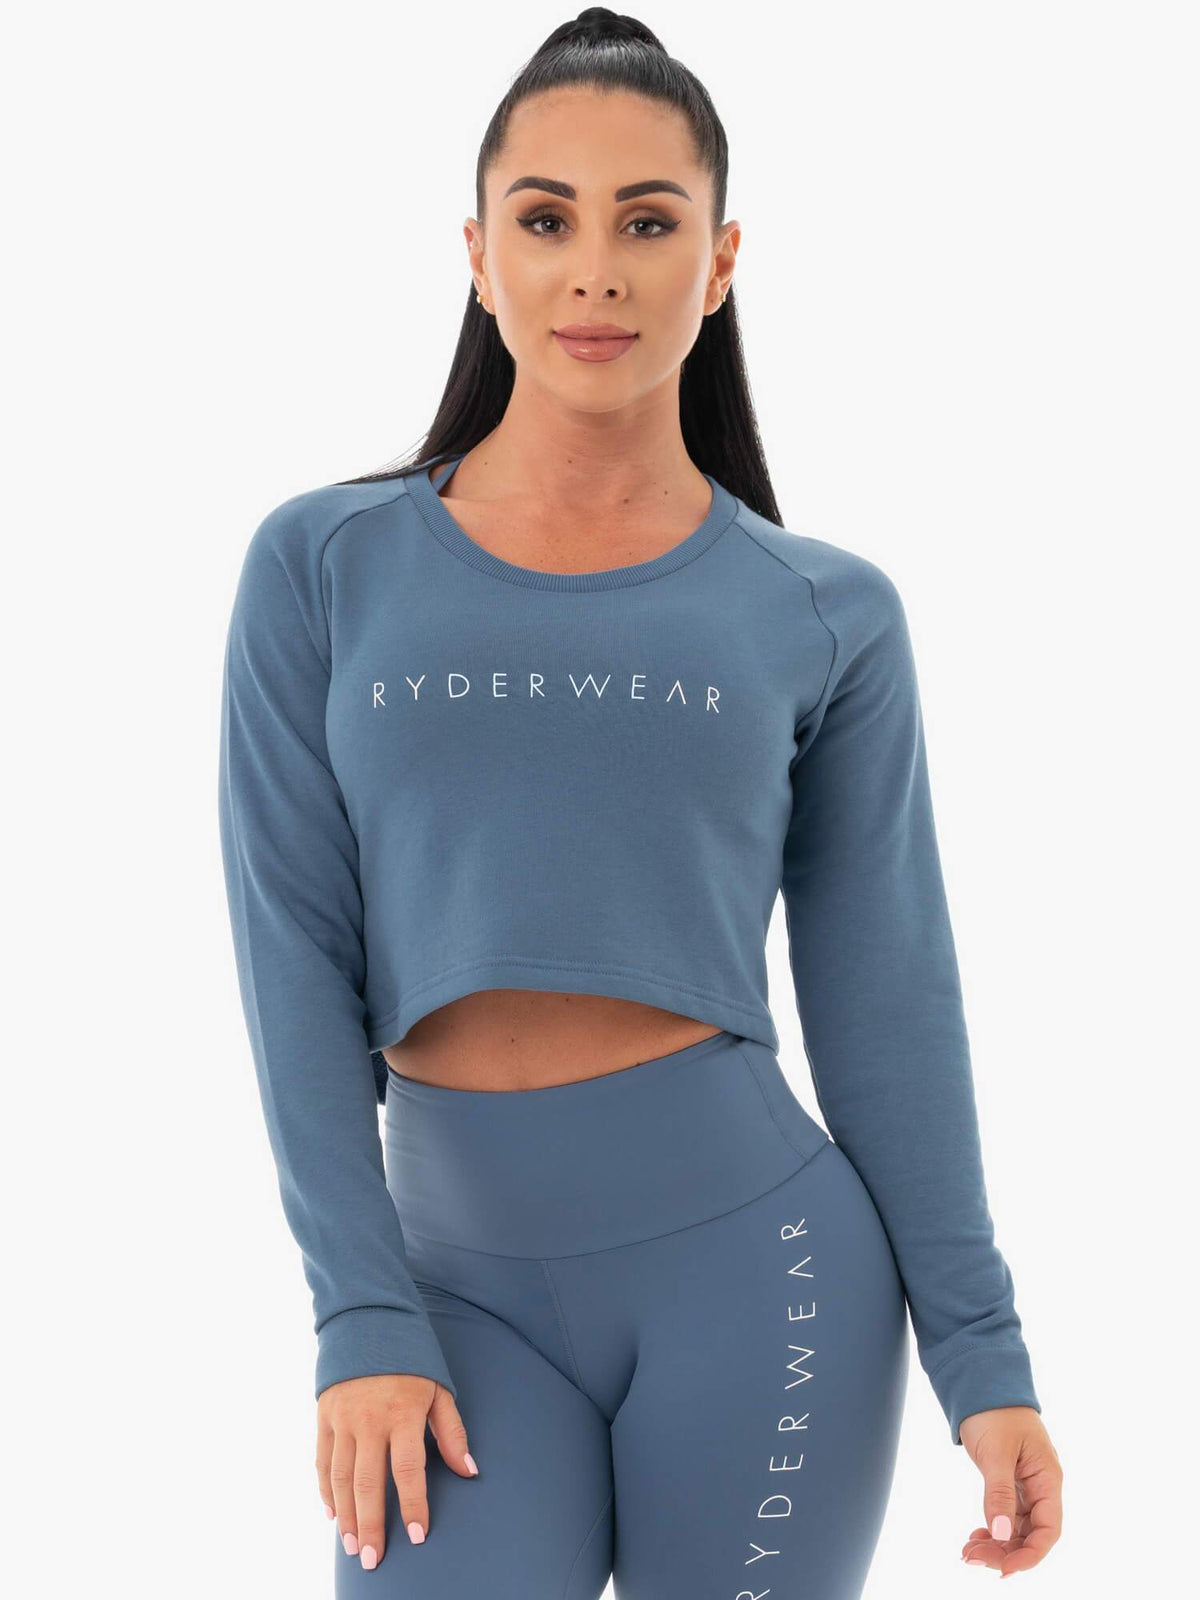 Ryderwear Staples Cropped Sweater Steel Blue